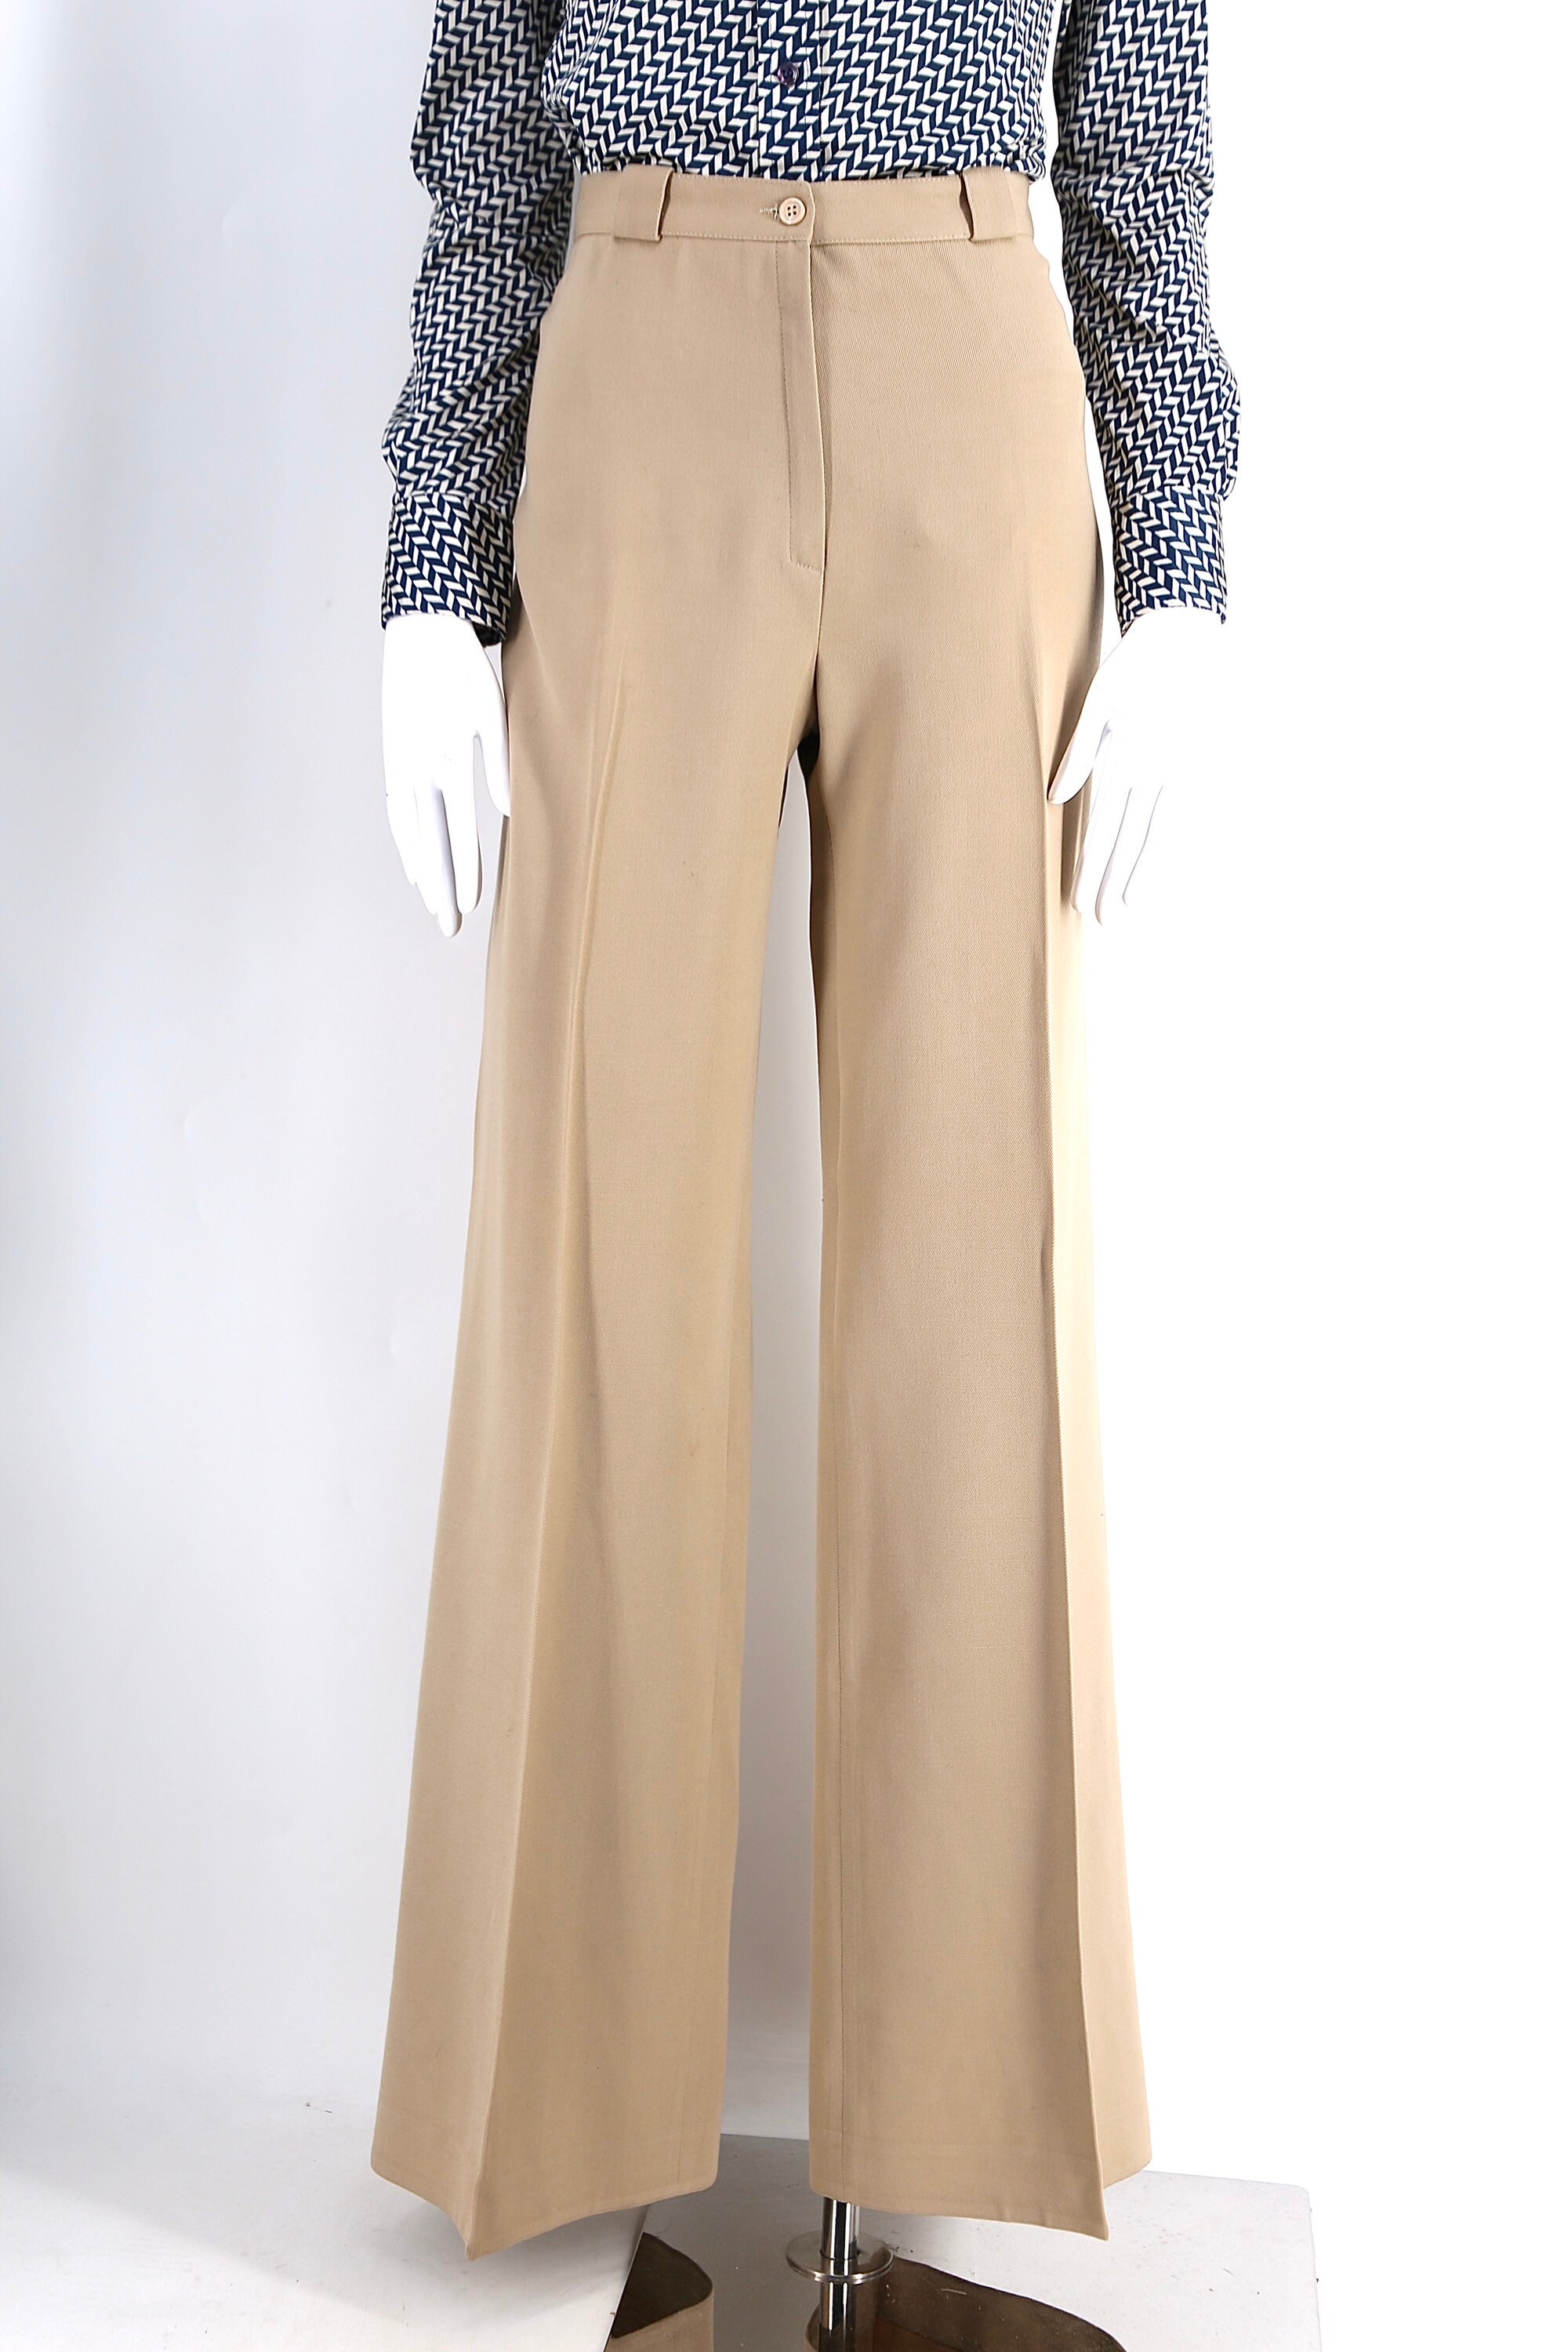 70s French high waist khaki wide leg bell bottoms 8 / vintage 1970s ...